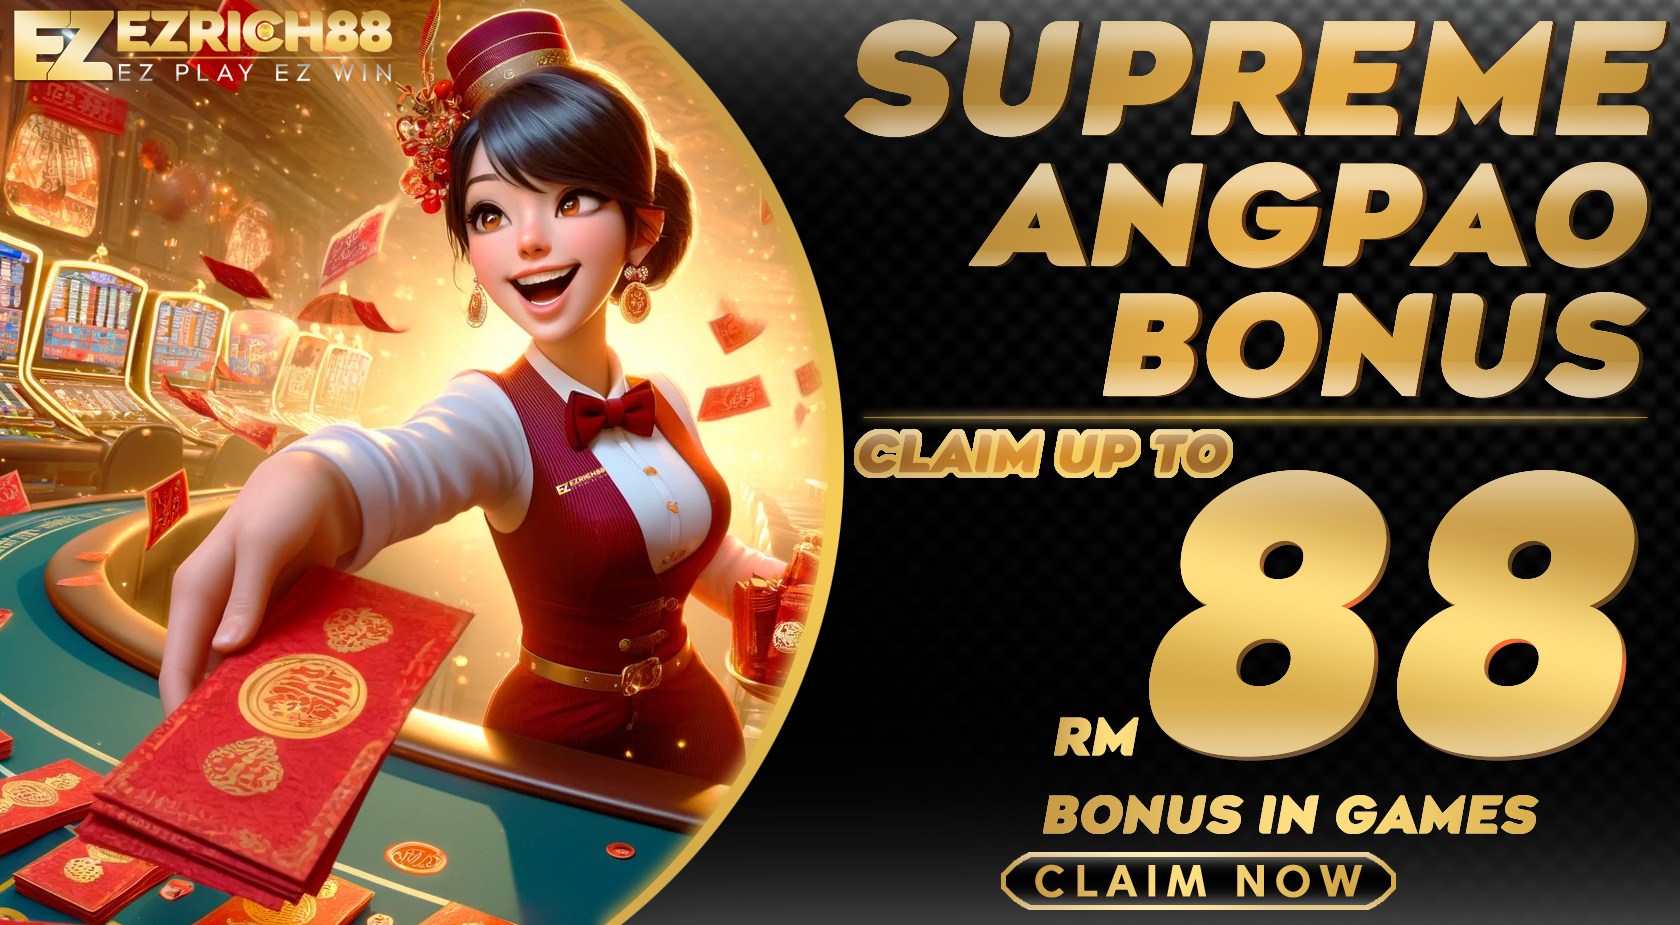 Angpao Bonus RM88